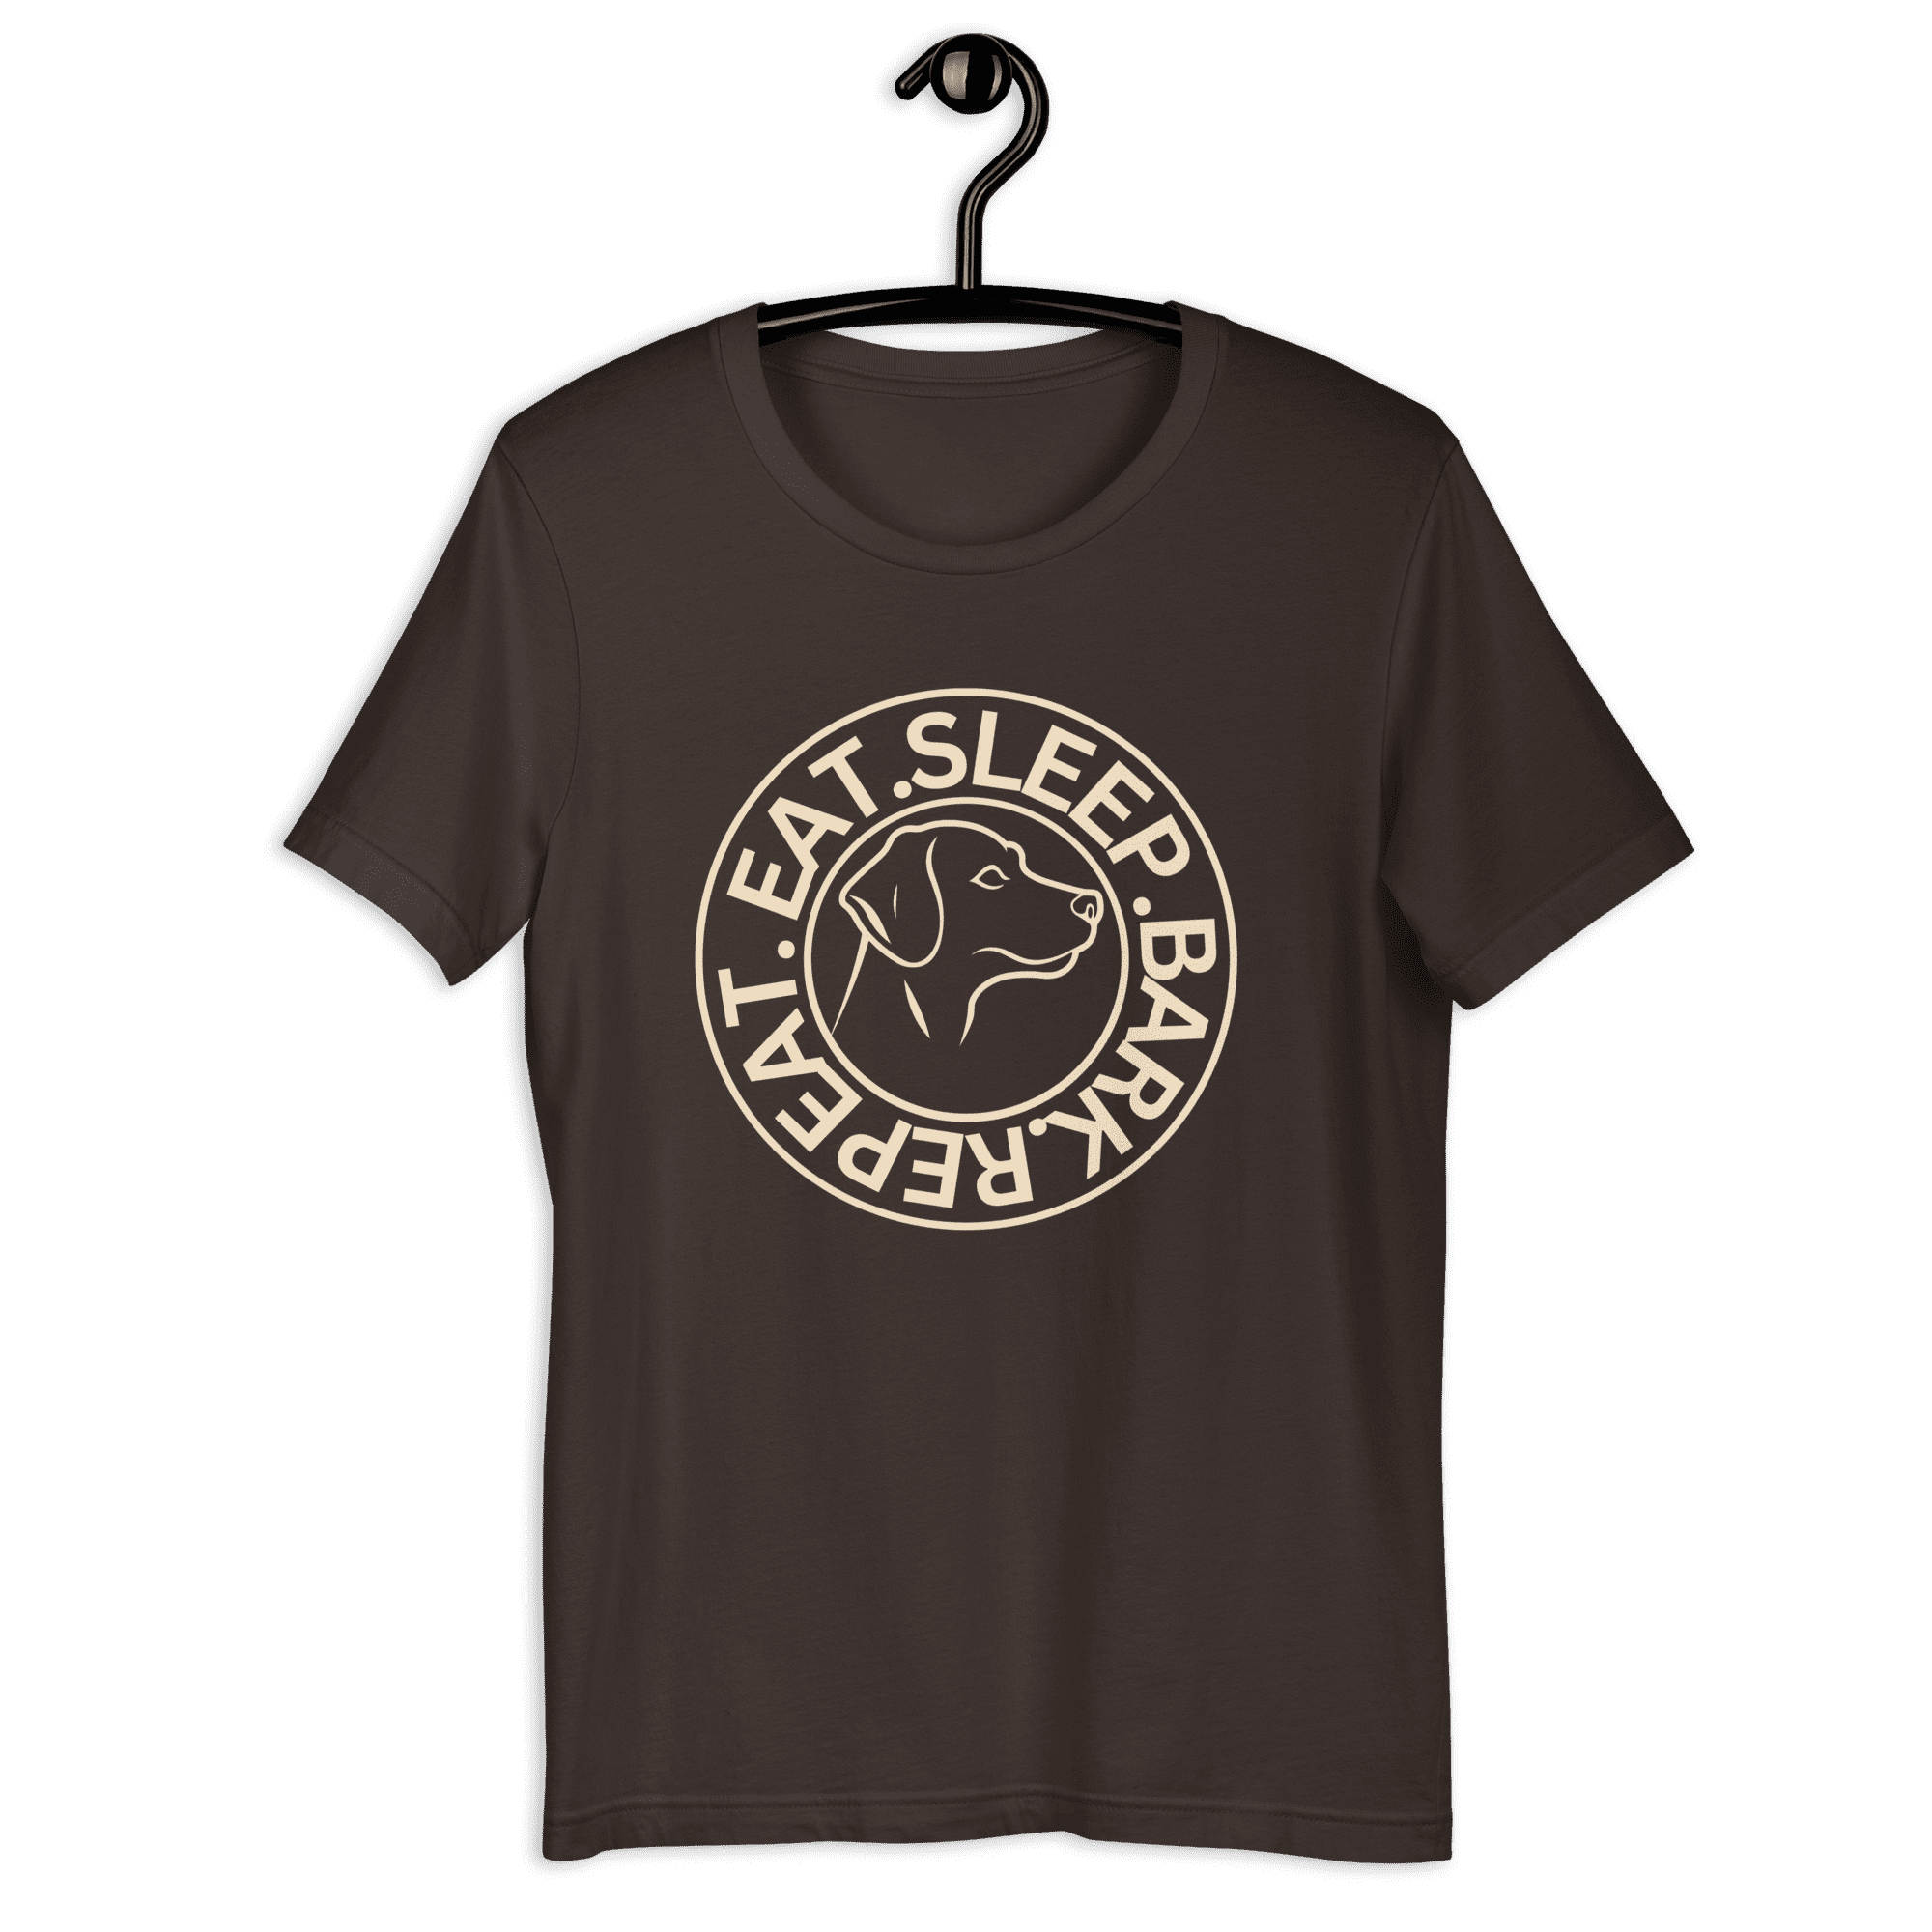 Eat Sleep Bark Repeat Labrador Retriever Unisex T-Shirt. Brown